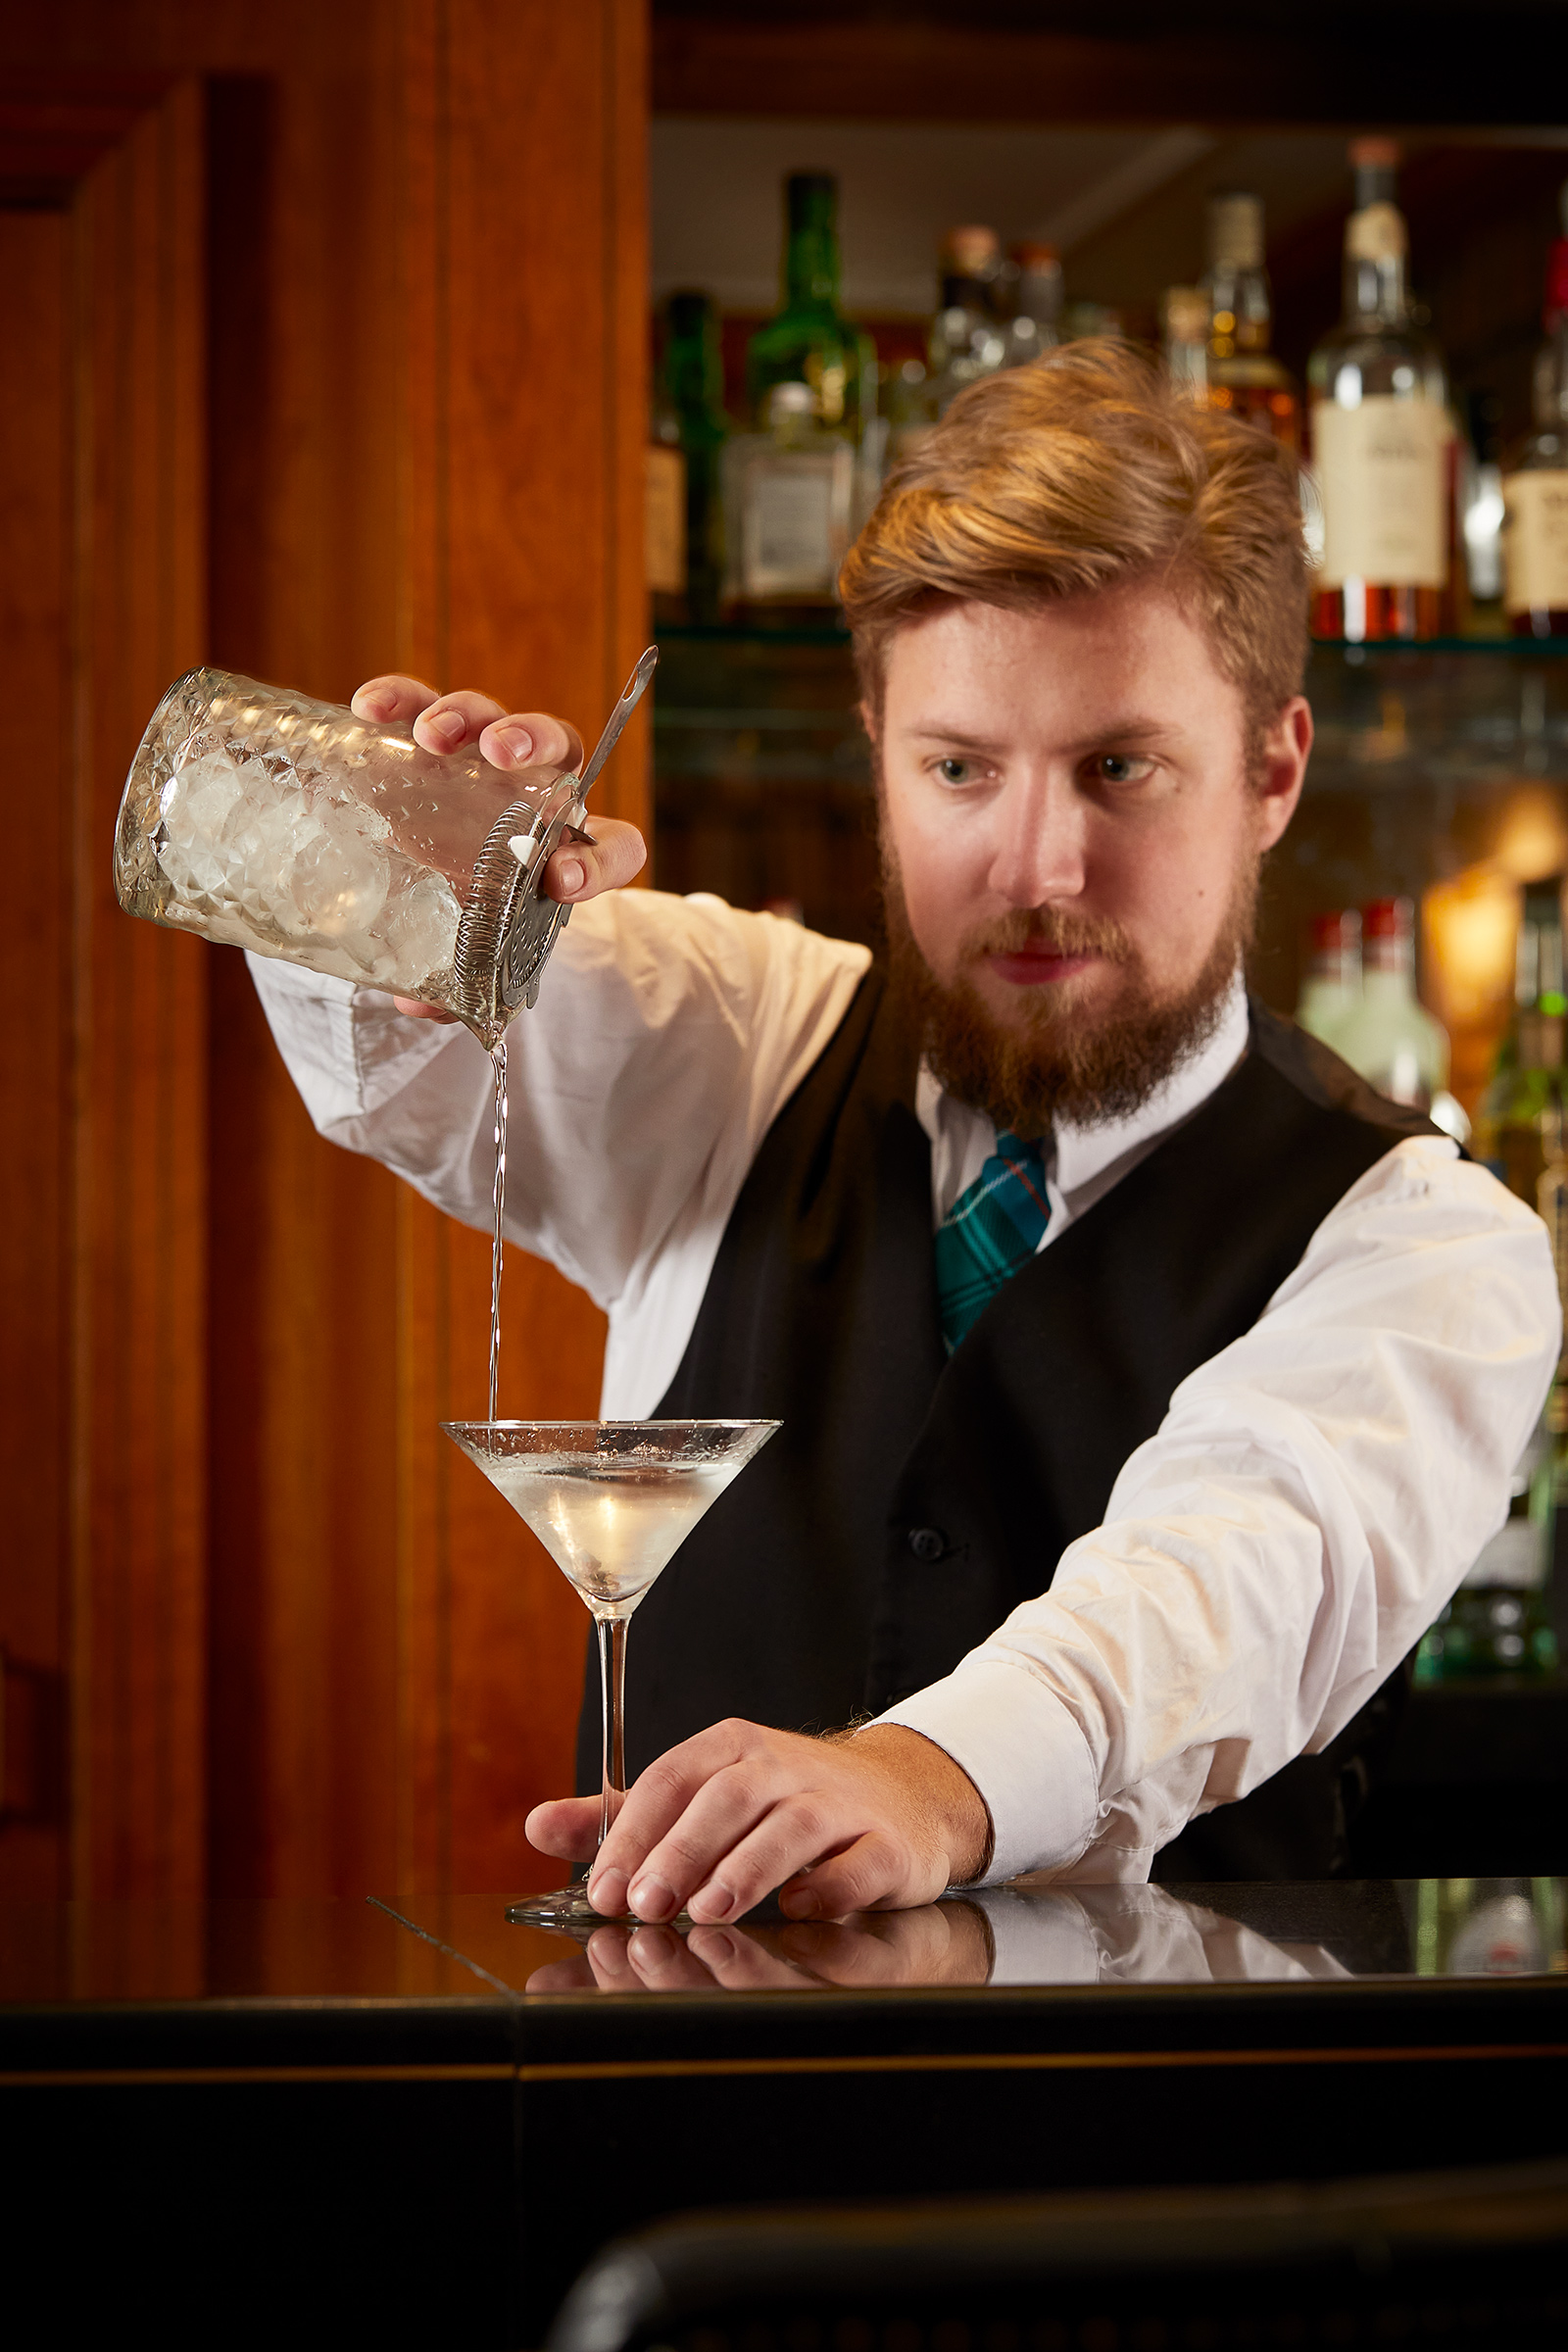 Pouring Martini, Bath Spa Hotel, UK drinks photographer, Edinburgh hospitality and travel photographer.